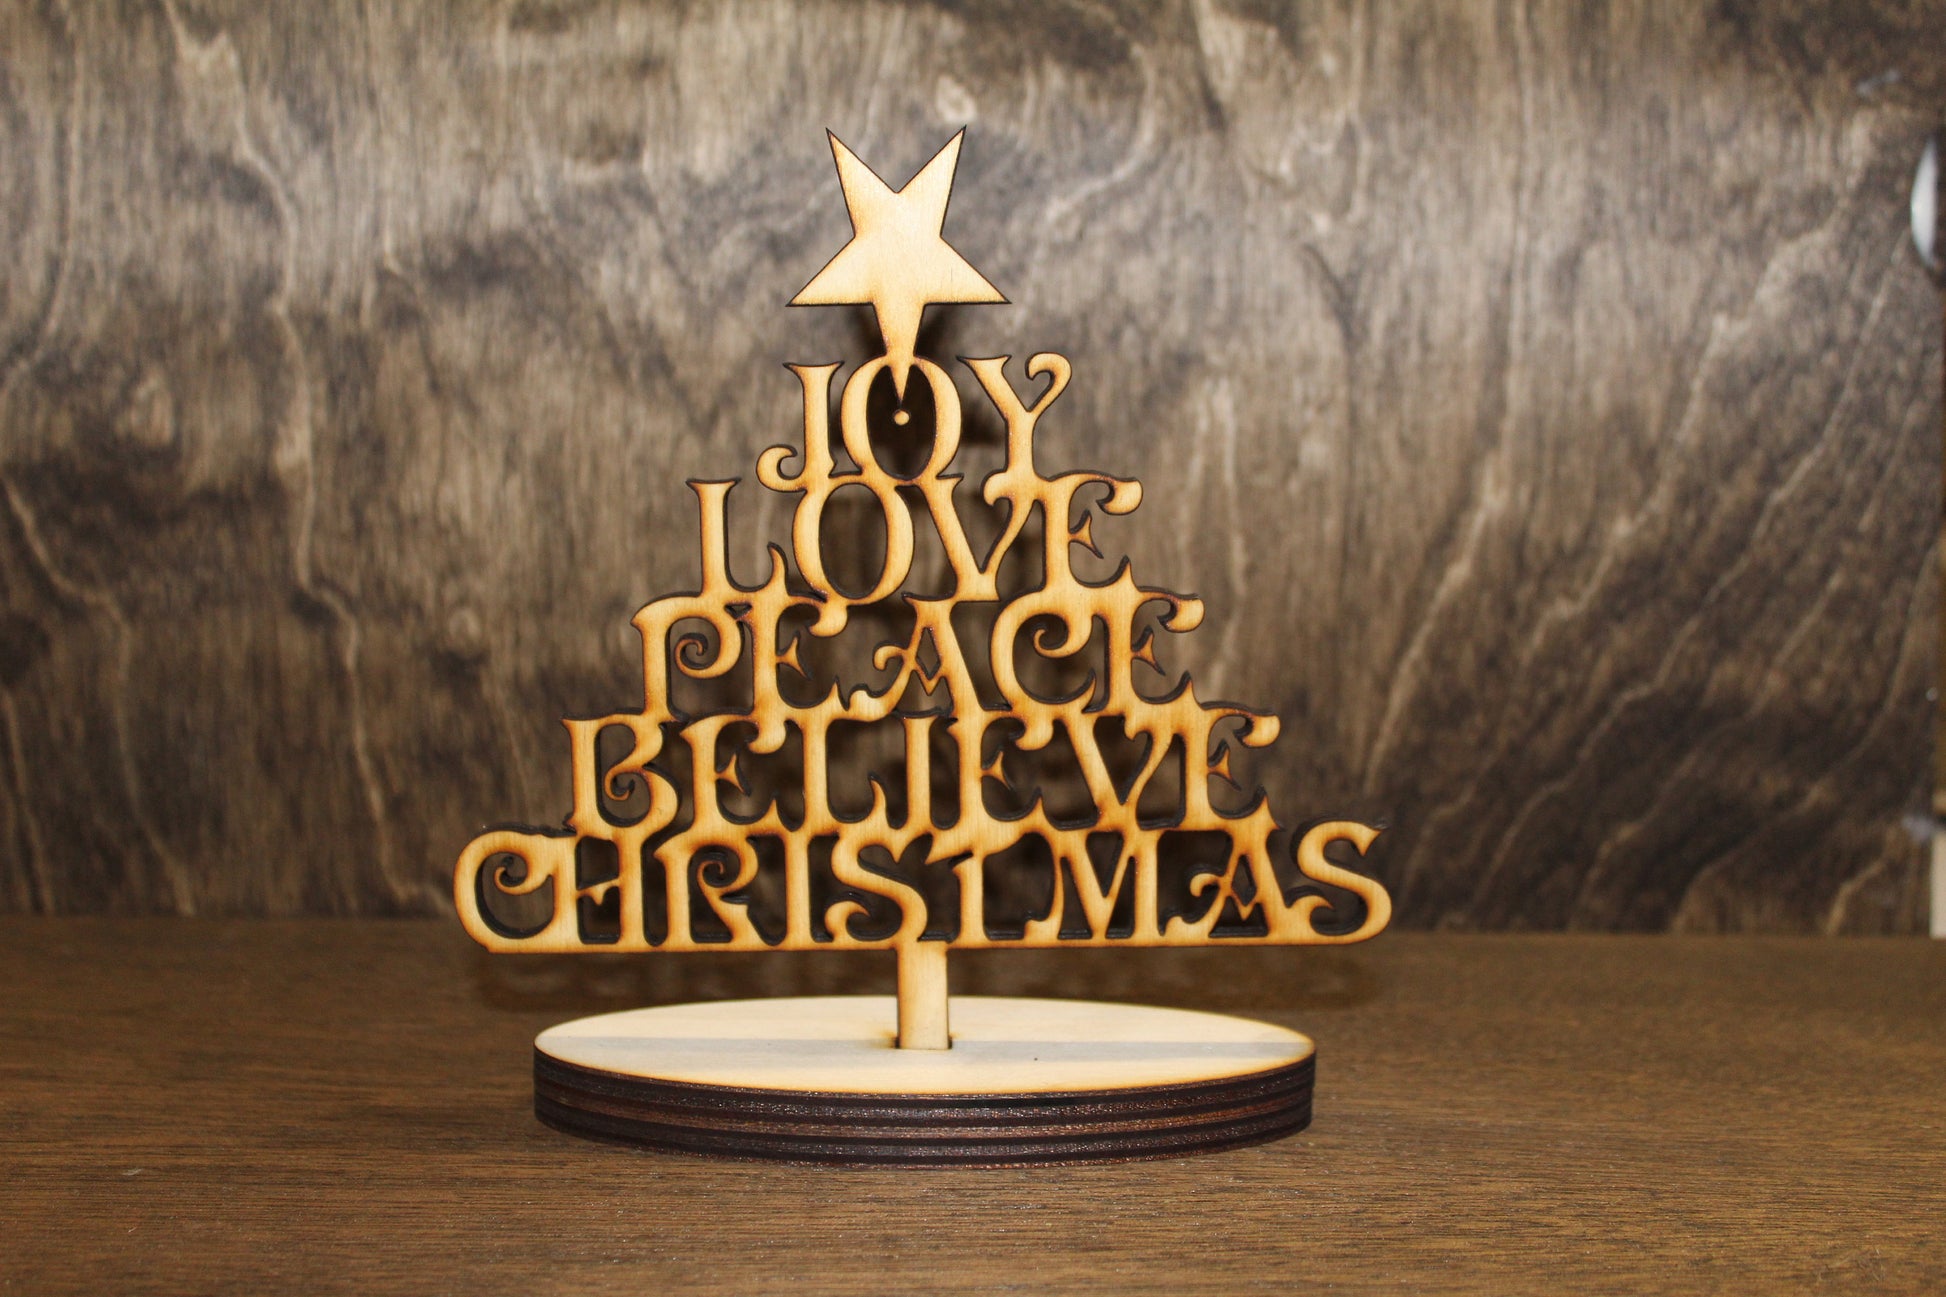 Free Standing Christmas Tree Wood Shelf Sitter Stand 3D Text Joy Love Peace Believe  DIY Wood Word Laser Cut Wooden Decor Birch